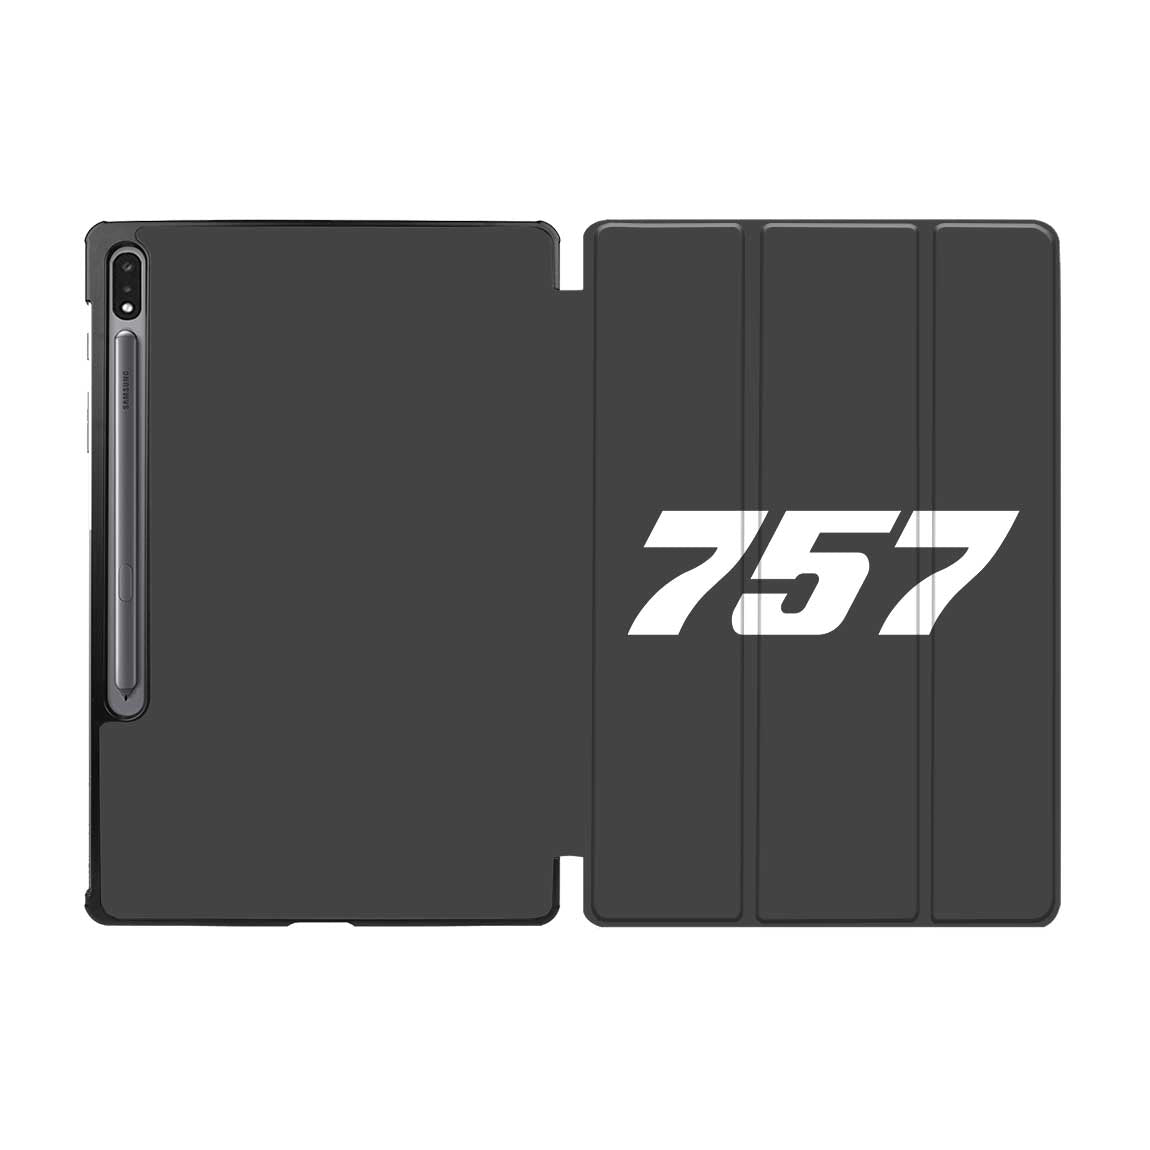 757 Flat Text Designed Samsung Tablet Cases